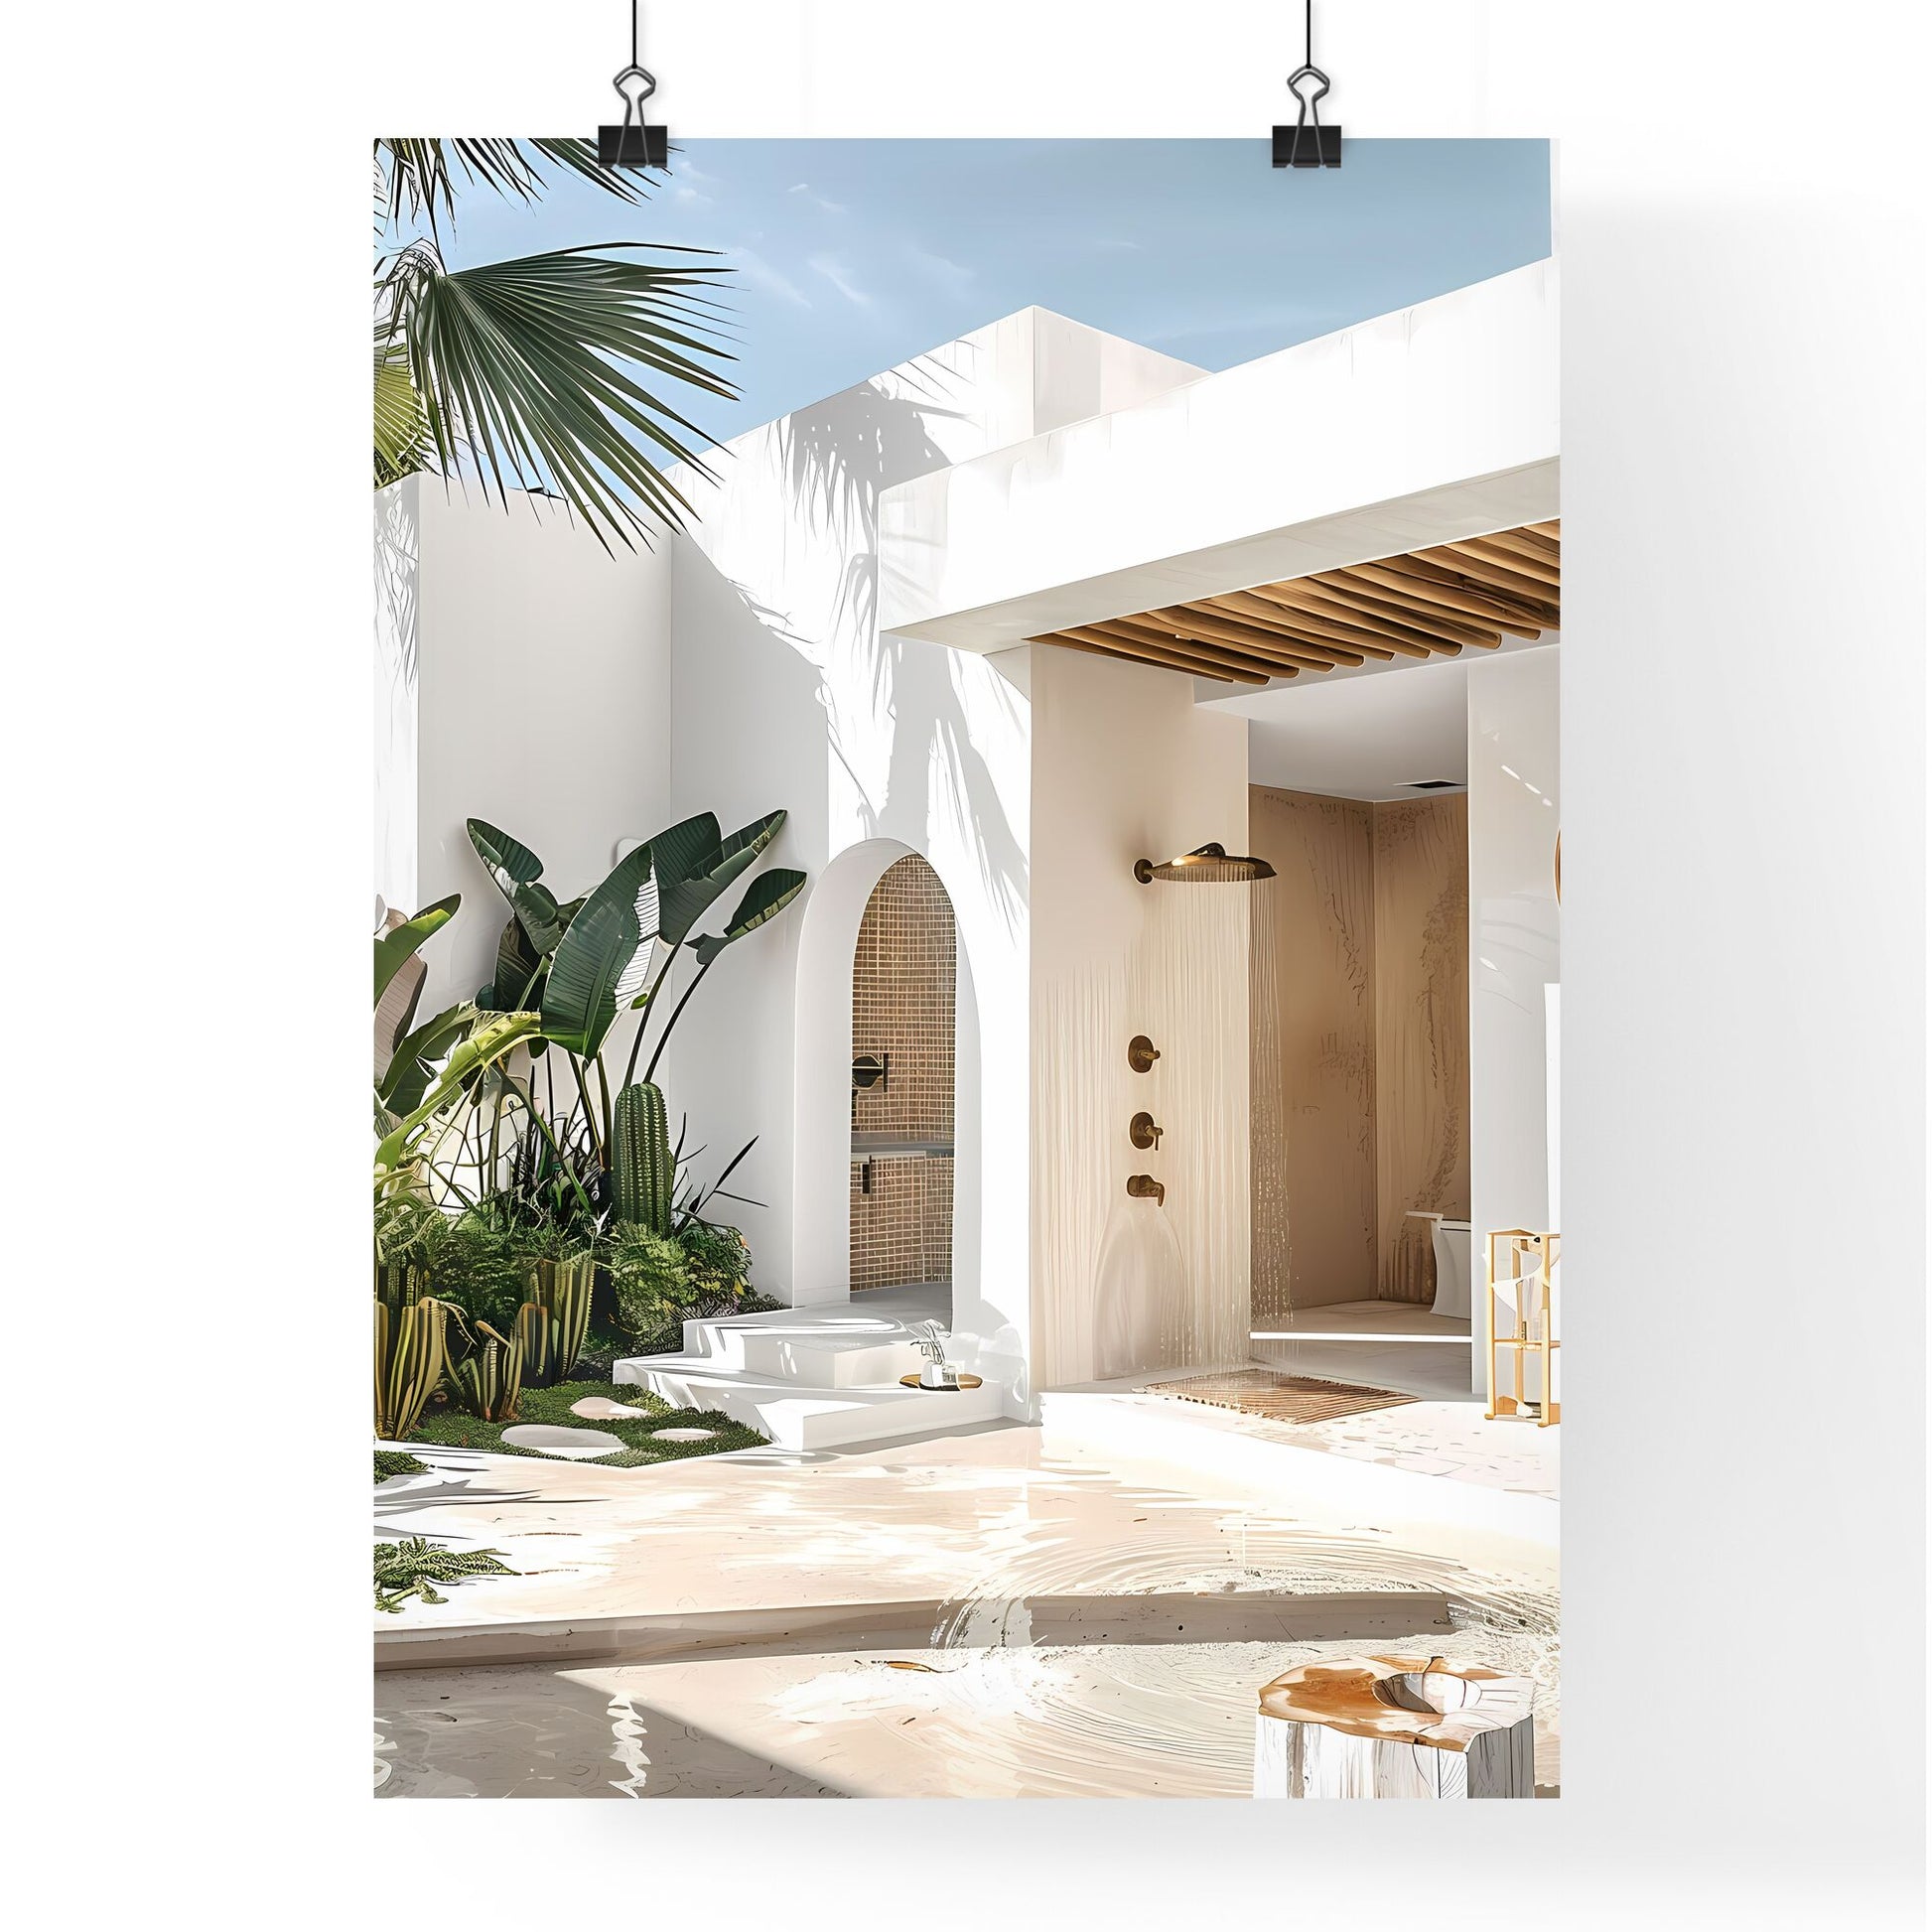 Minimalist Outdoor Garden Oasis: Tropical Plants, Cacti, Wooden Accents, White Walls, Concrete Floor, Beach House, Golden Hour Lighting, Architectural Digest Quality Default Title